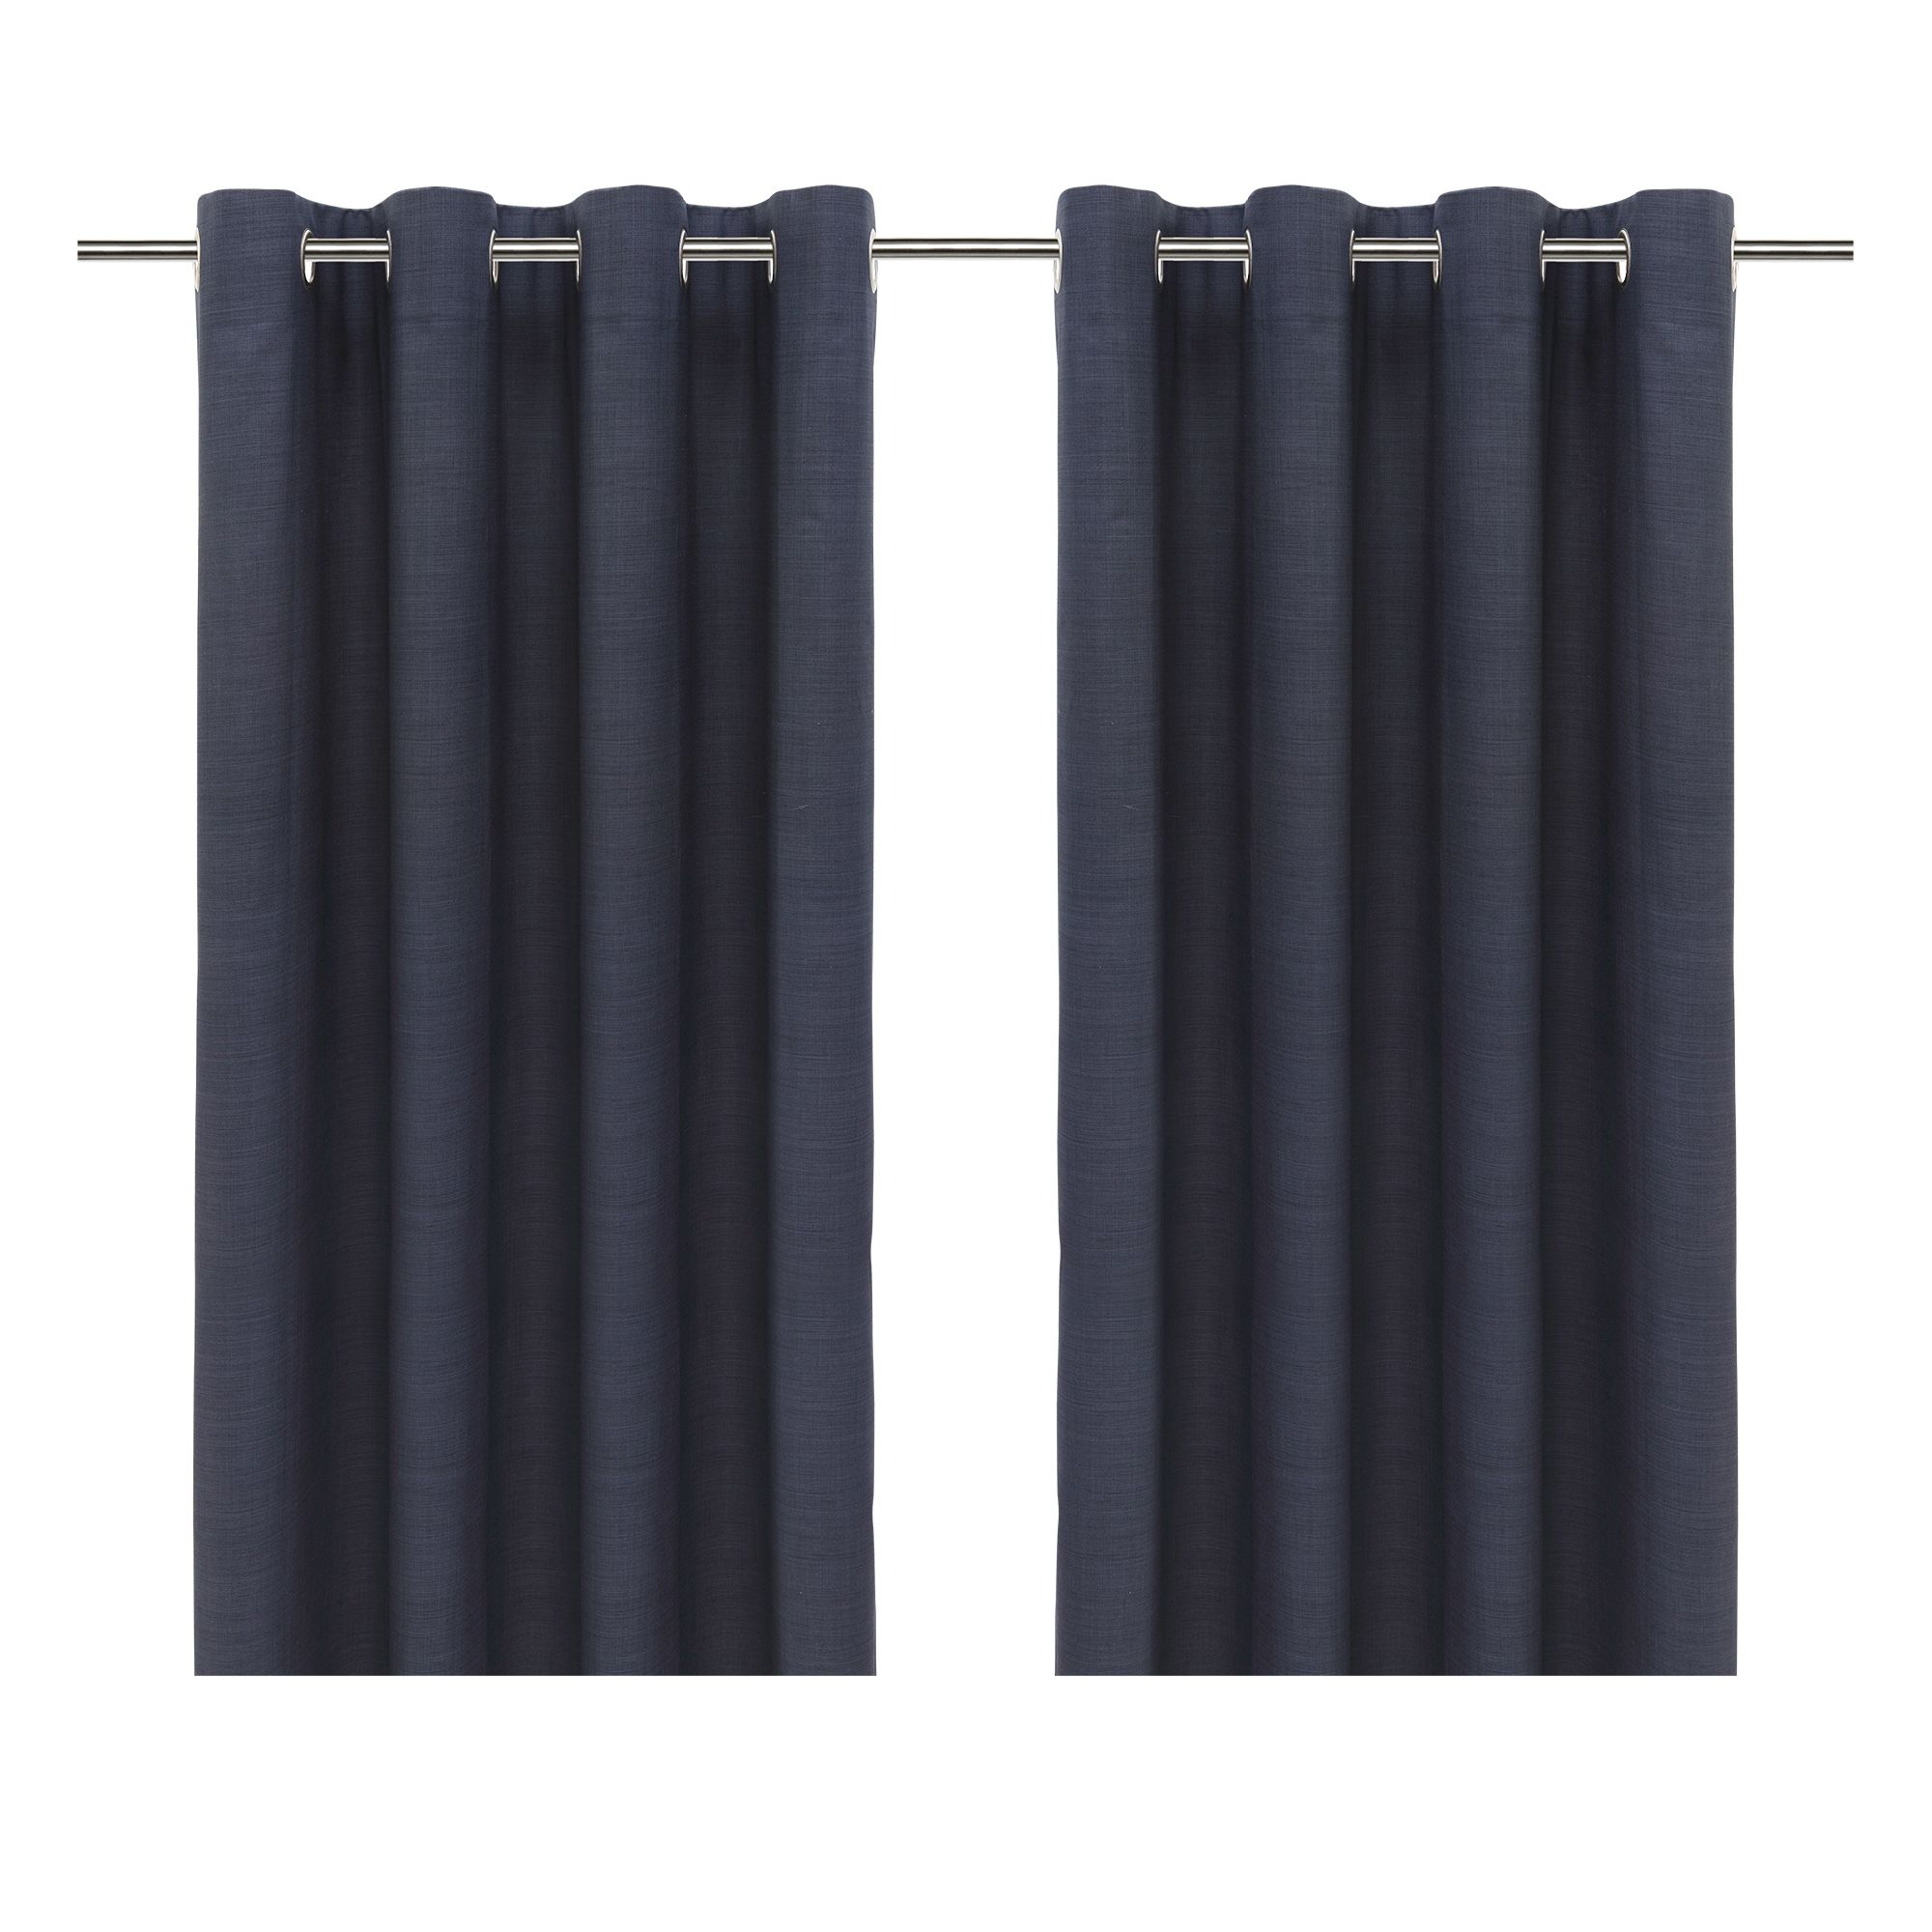 Glend Navy Plain woven Blackout & thermal Eyelet Curtain (W)167cm (L)228cm, Pair